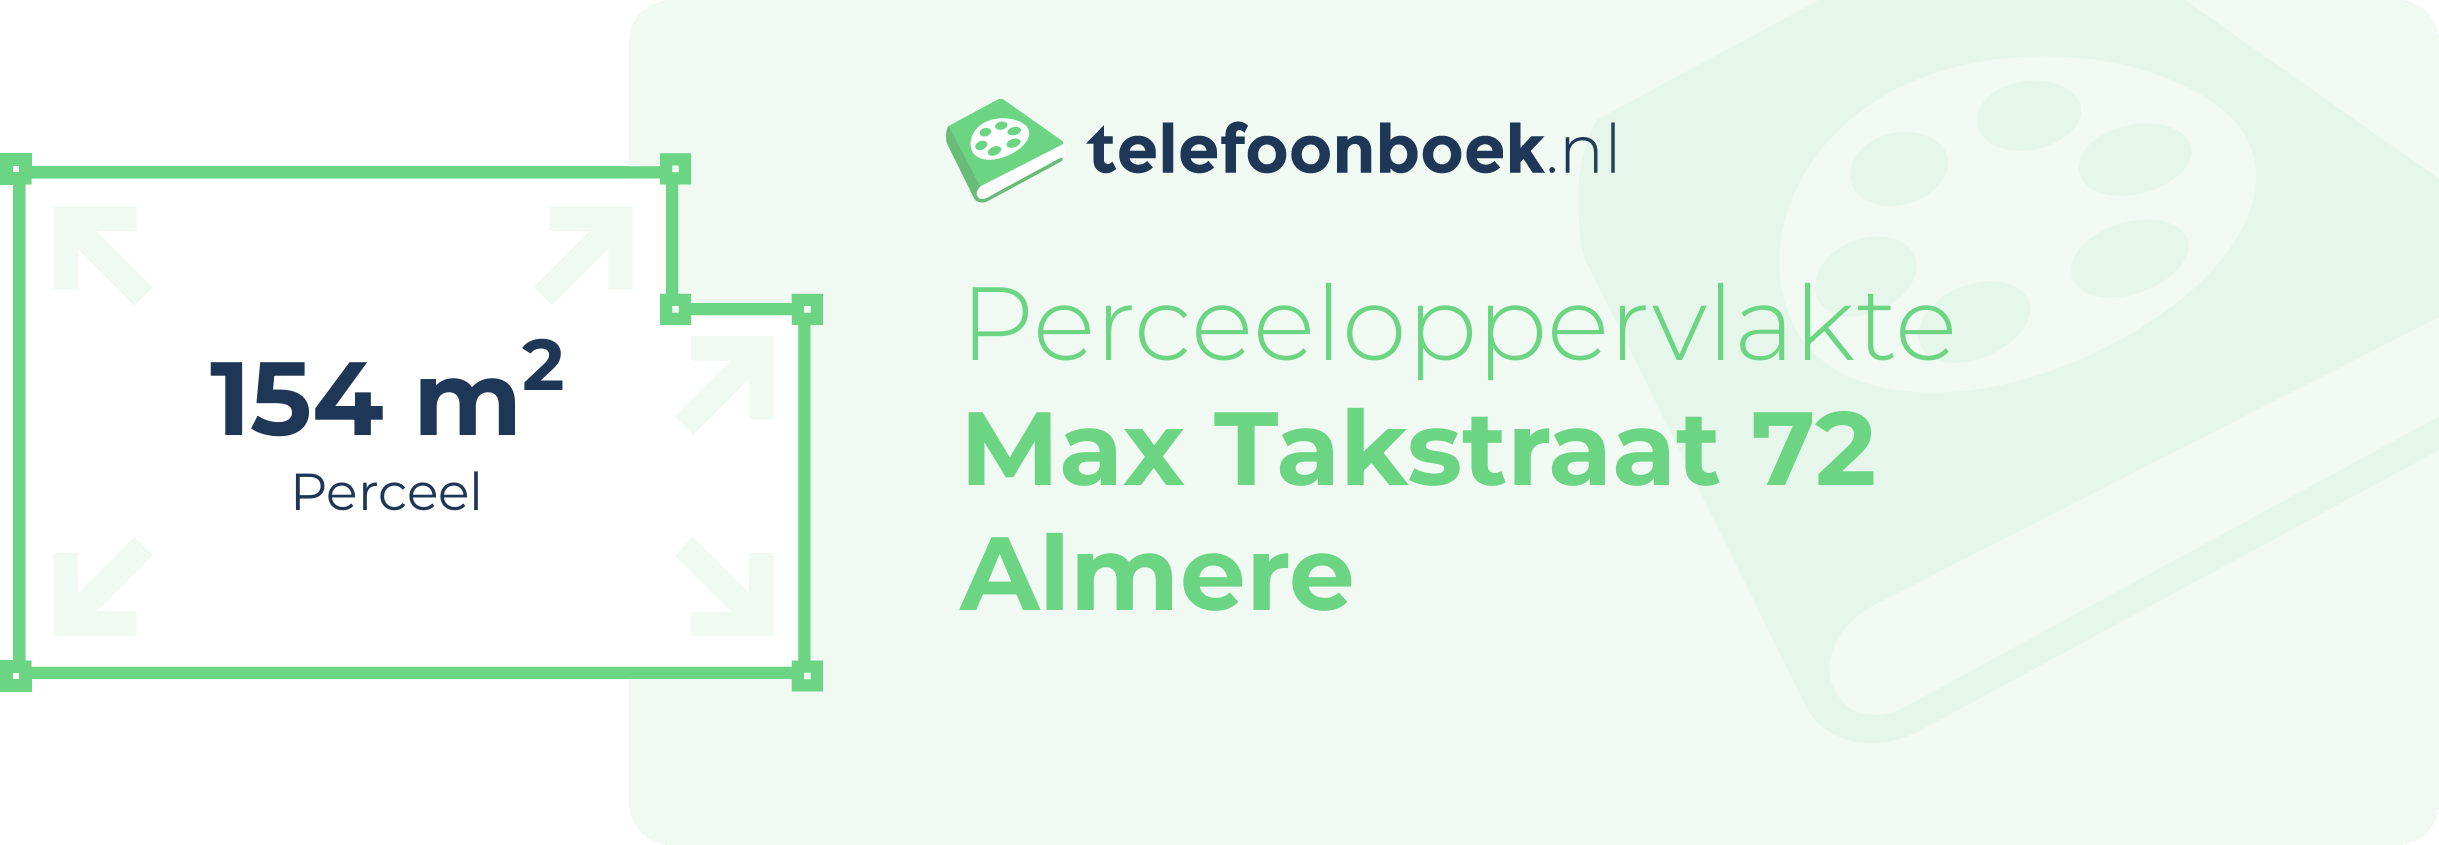 Perceeloppervlakte Max Takstraat 72 Almere